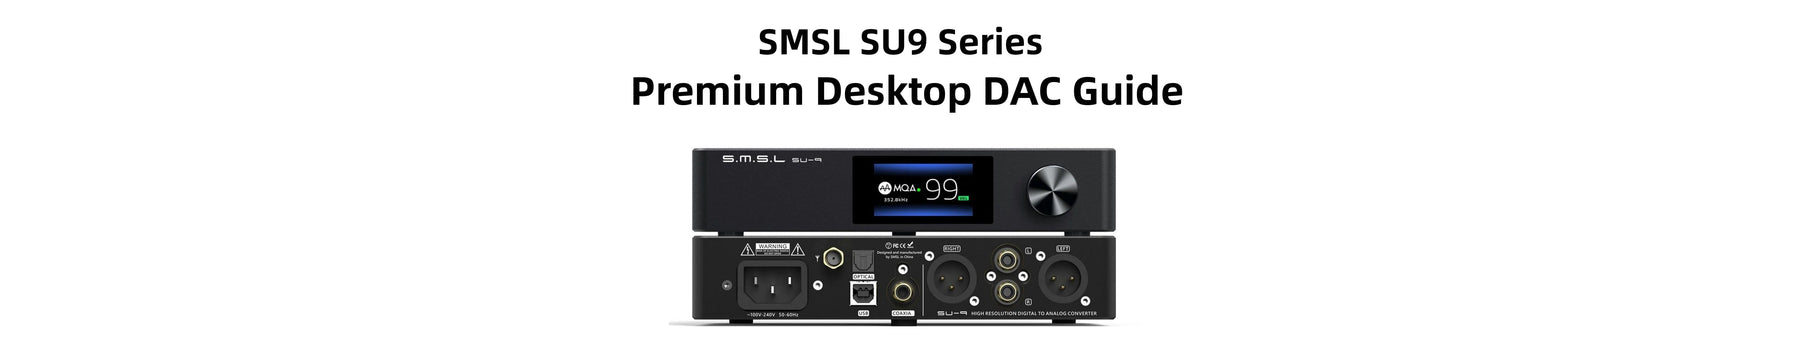 SMSL SU9 Series Buying Guide: Ultimate Guide To Understand Flagship SU9 Series Desktop DACs!!